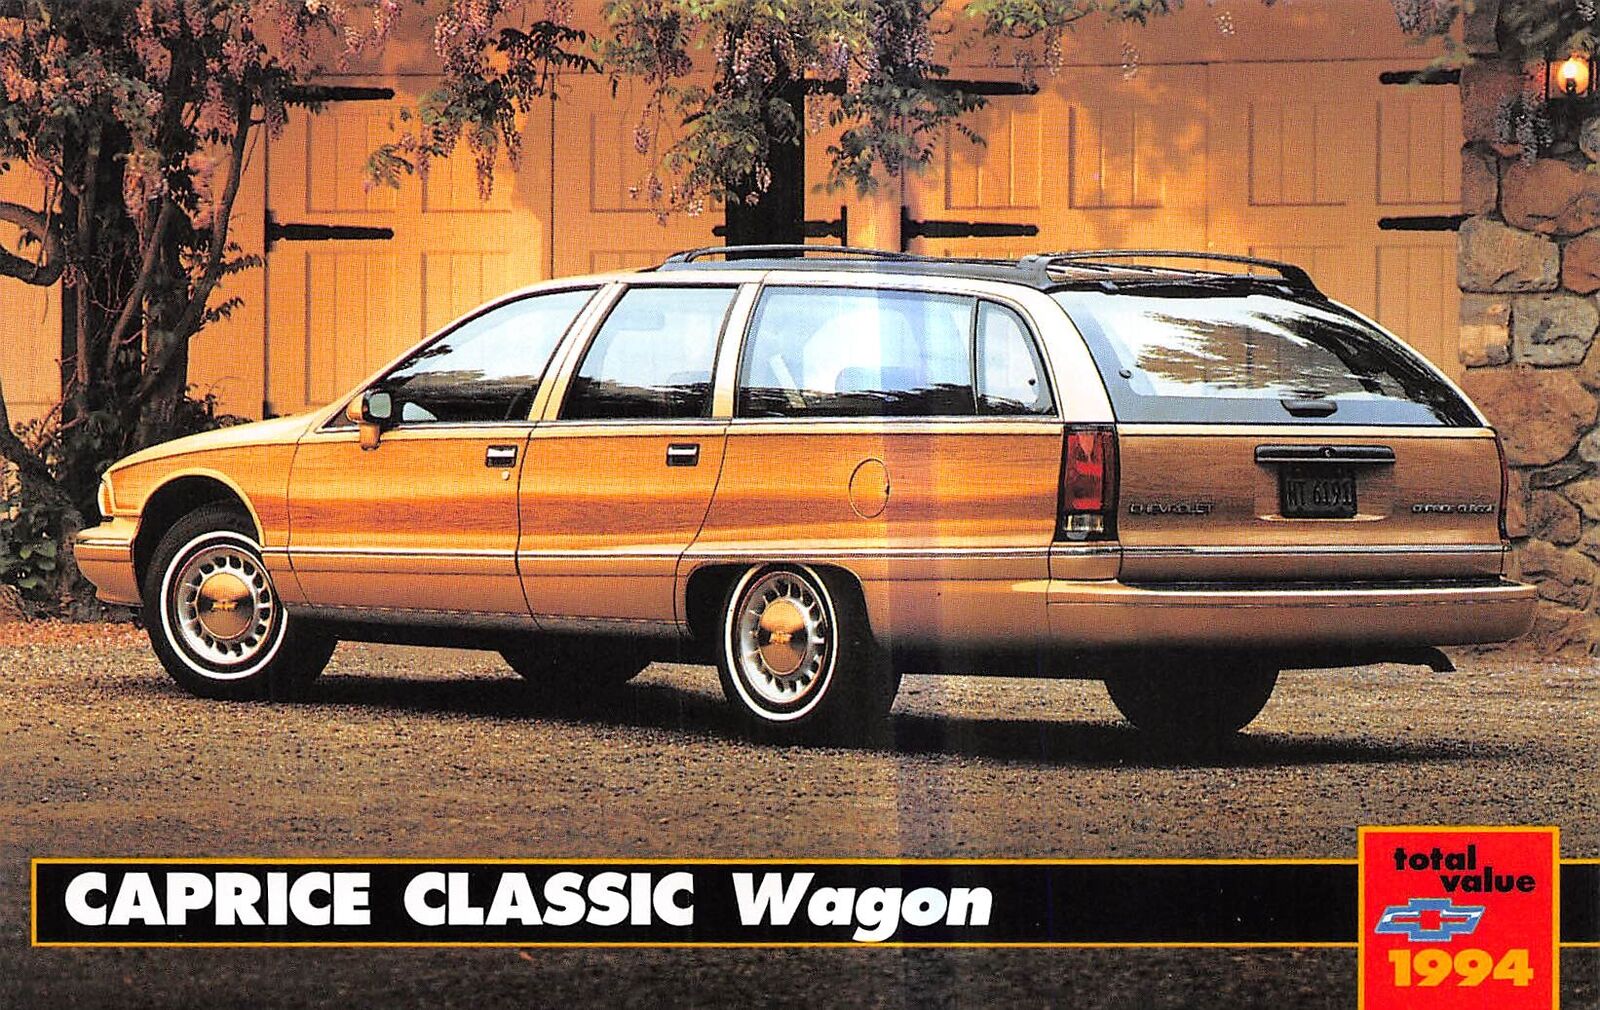 POSTCARD 1994 Caprice Classic Station wagon car automobile advertisement